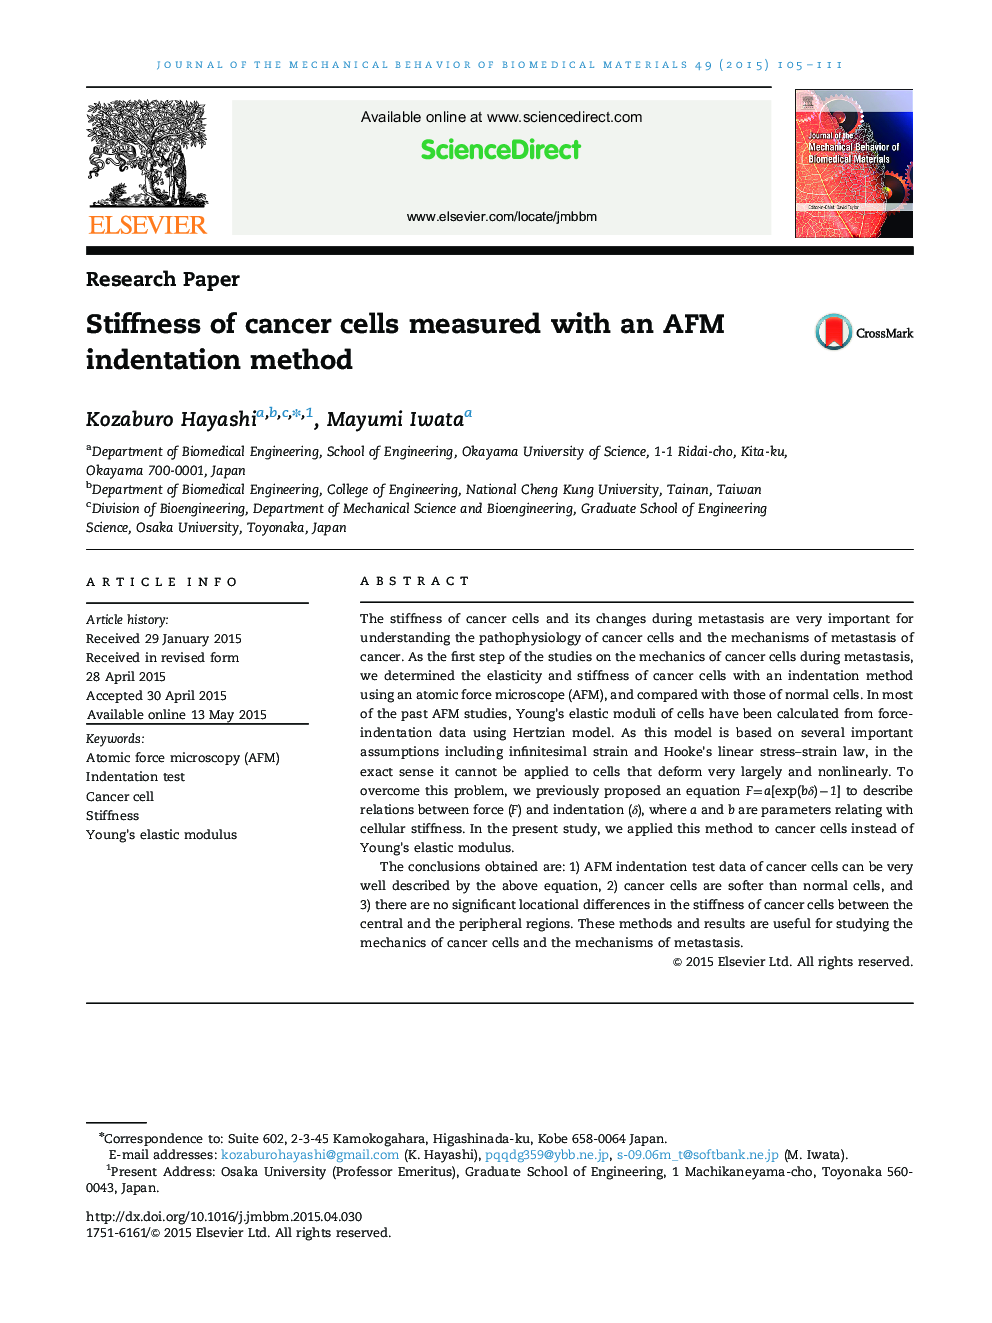 Stiffness of cancer cells measured with an AFM indentation method